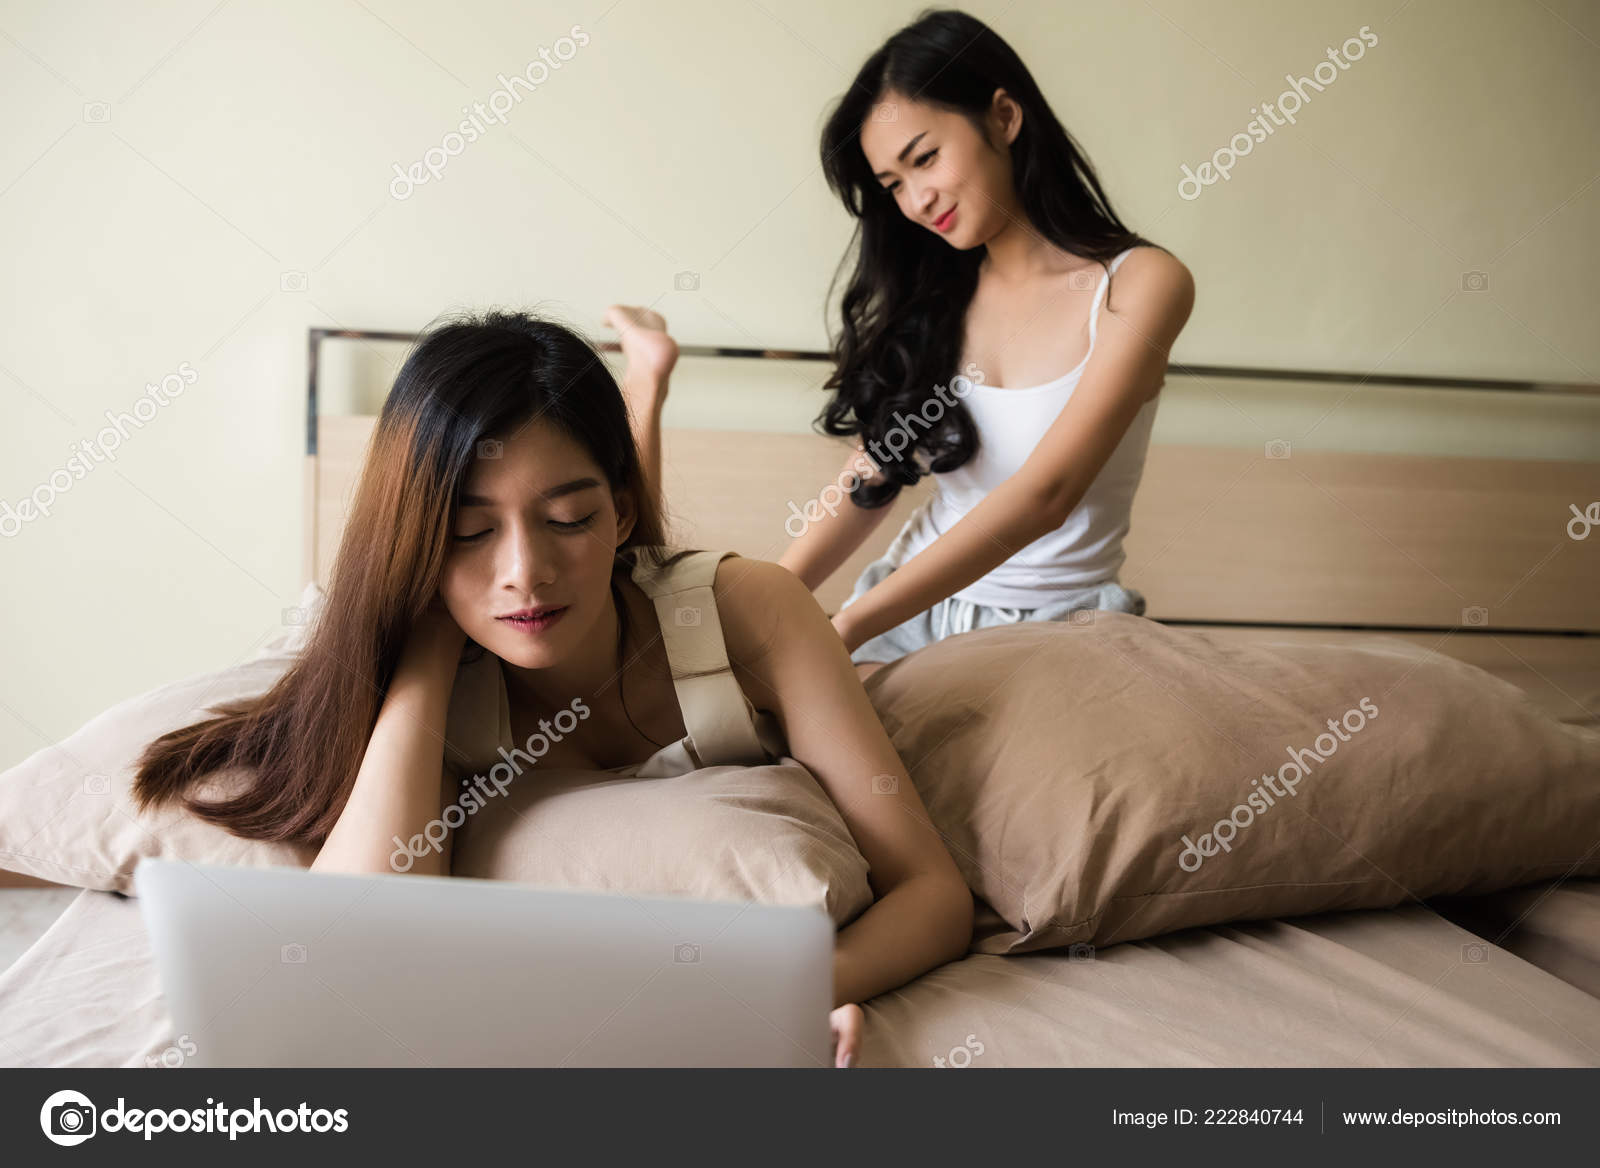 Black Lesbian Massage Porn - Black Girl Lesbian Massage - Best Sex Photos, Hot Porn ...